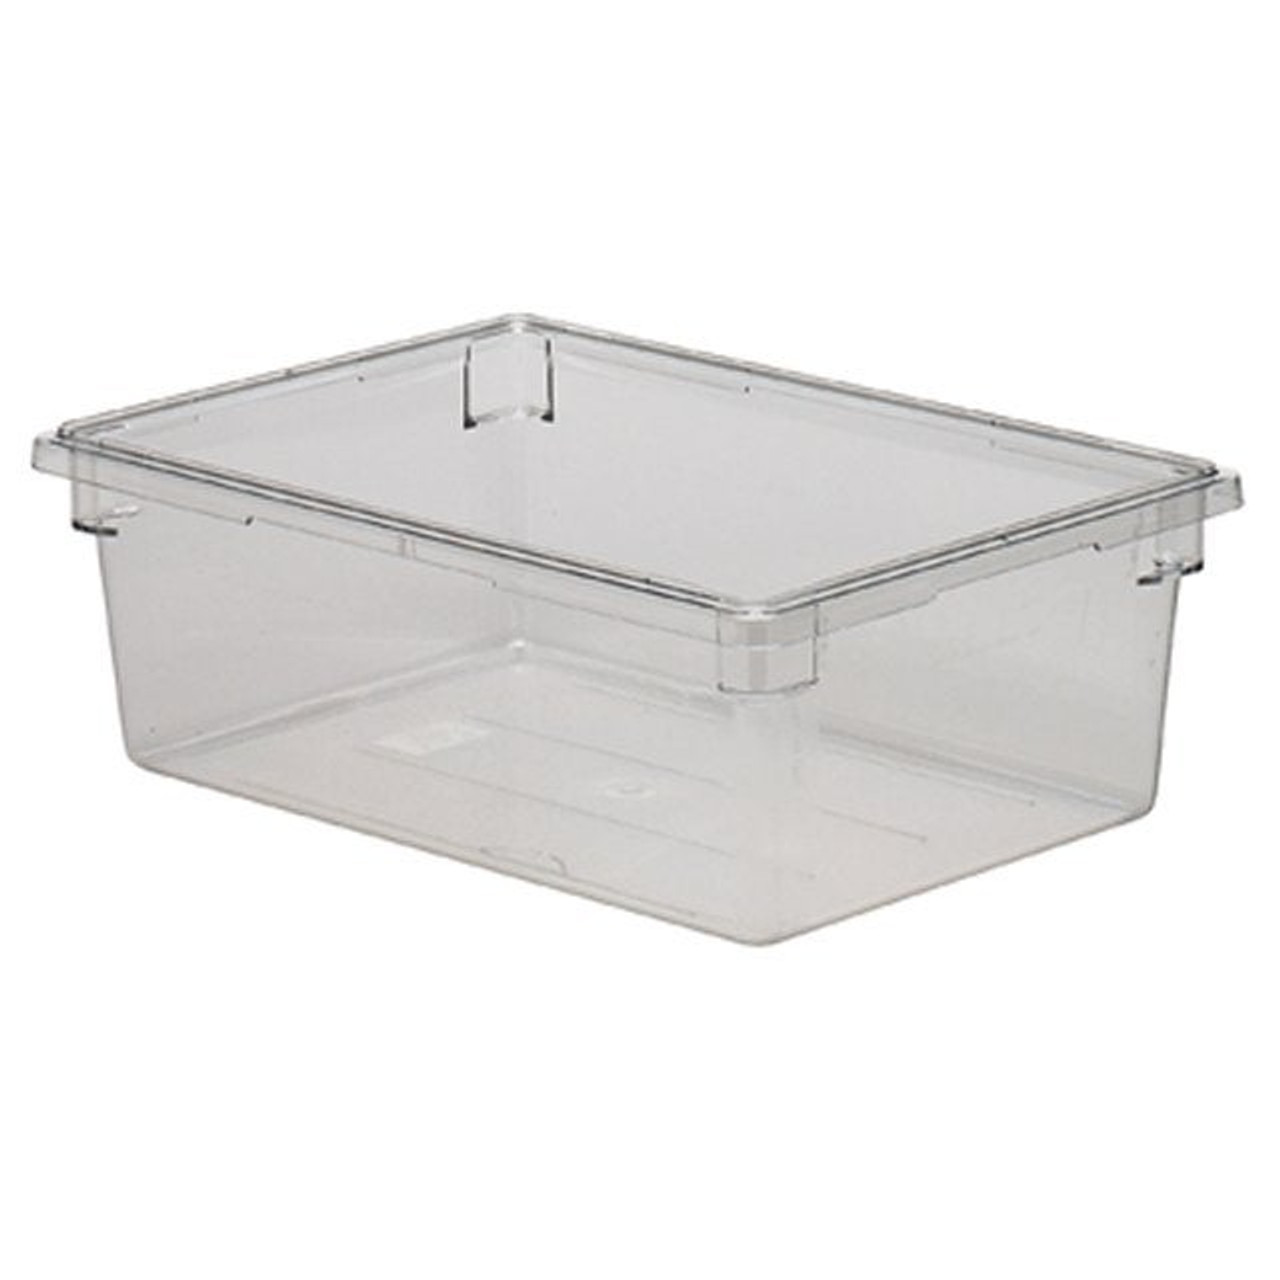 Cambro Clear Camwear Food Storage Box, 18 X 26 X 9In | 1UN/Unit, 1 Unit/Case